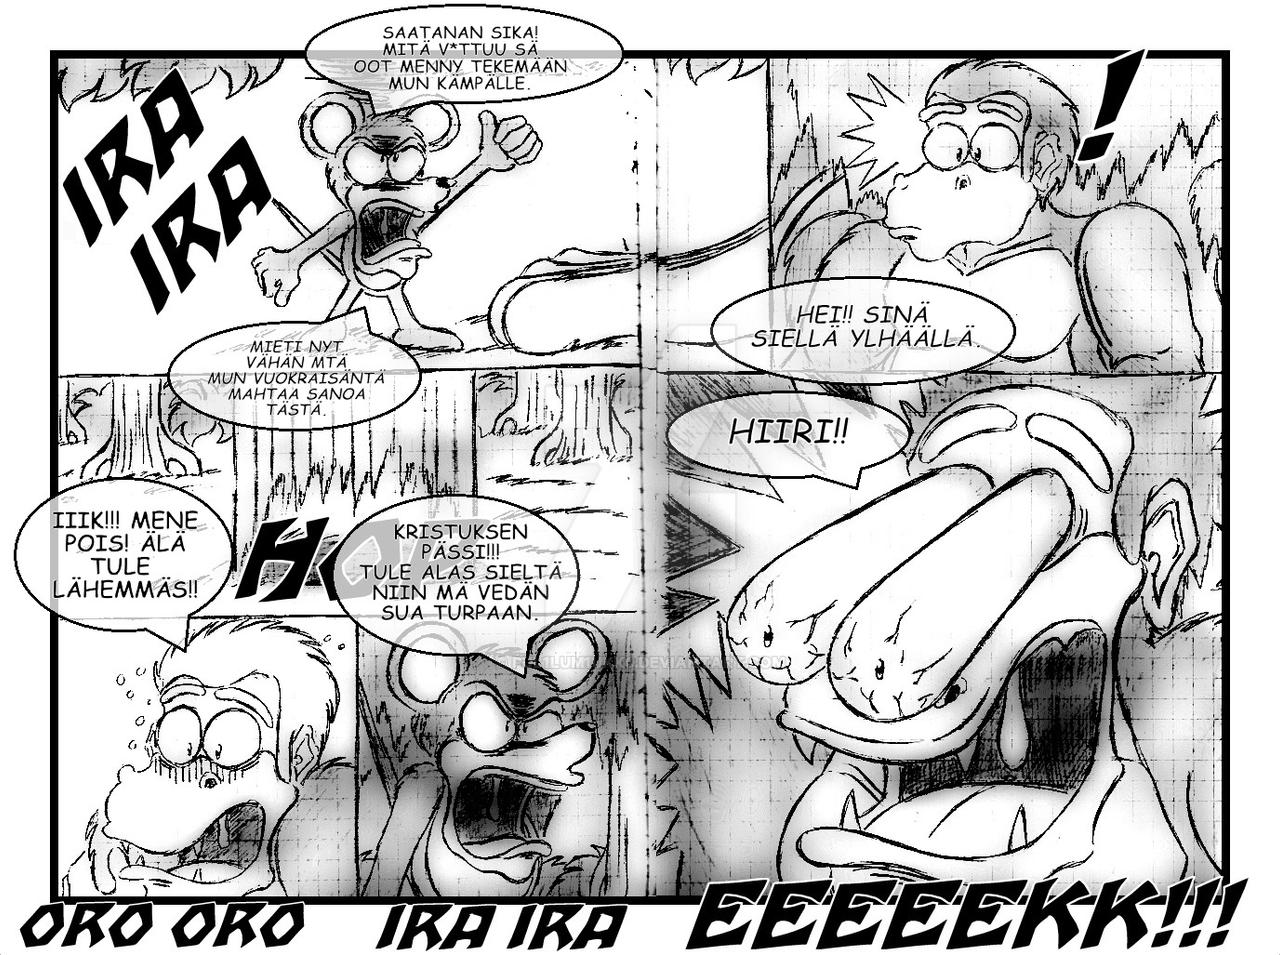 Fox Of The Jungle manga chapter 7 page 228-229